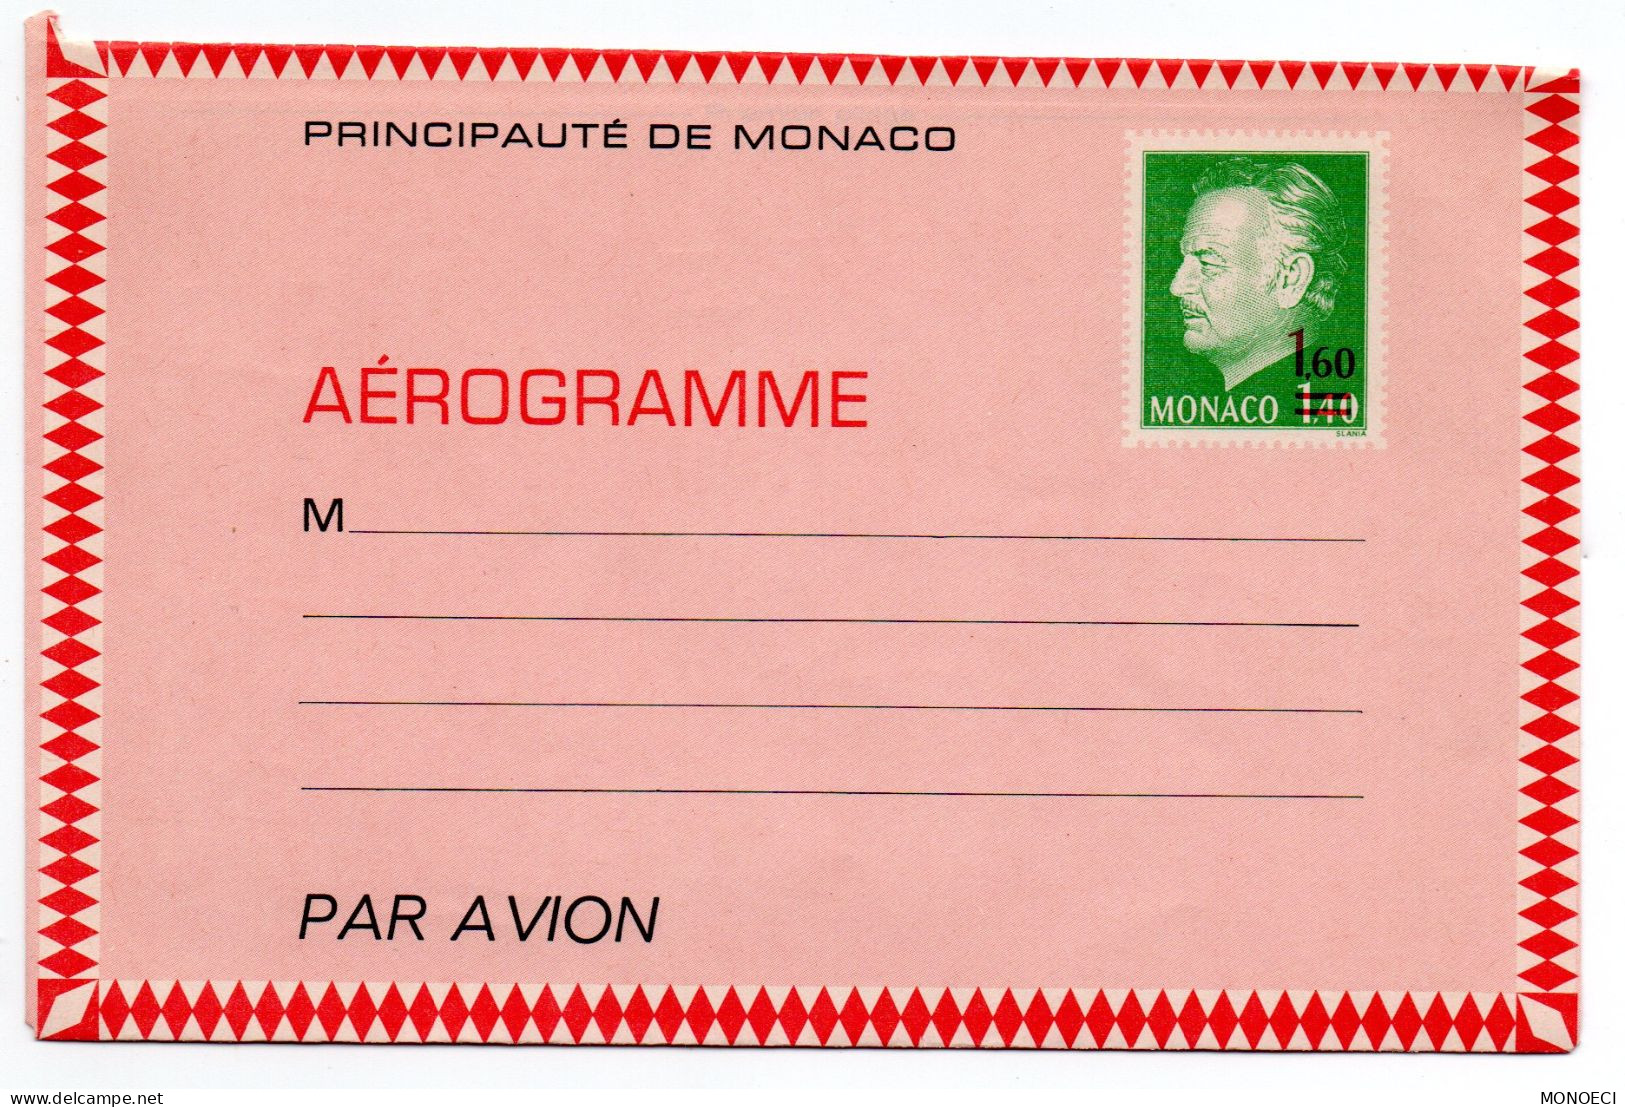 MONACO -- MONTE CARLO -- Monégasque -- Entier Postal -- Aérogramme -- Prince Rainier III 1F40 Surchargé 1F60 (1976) - Ganzsachen